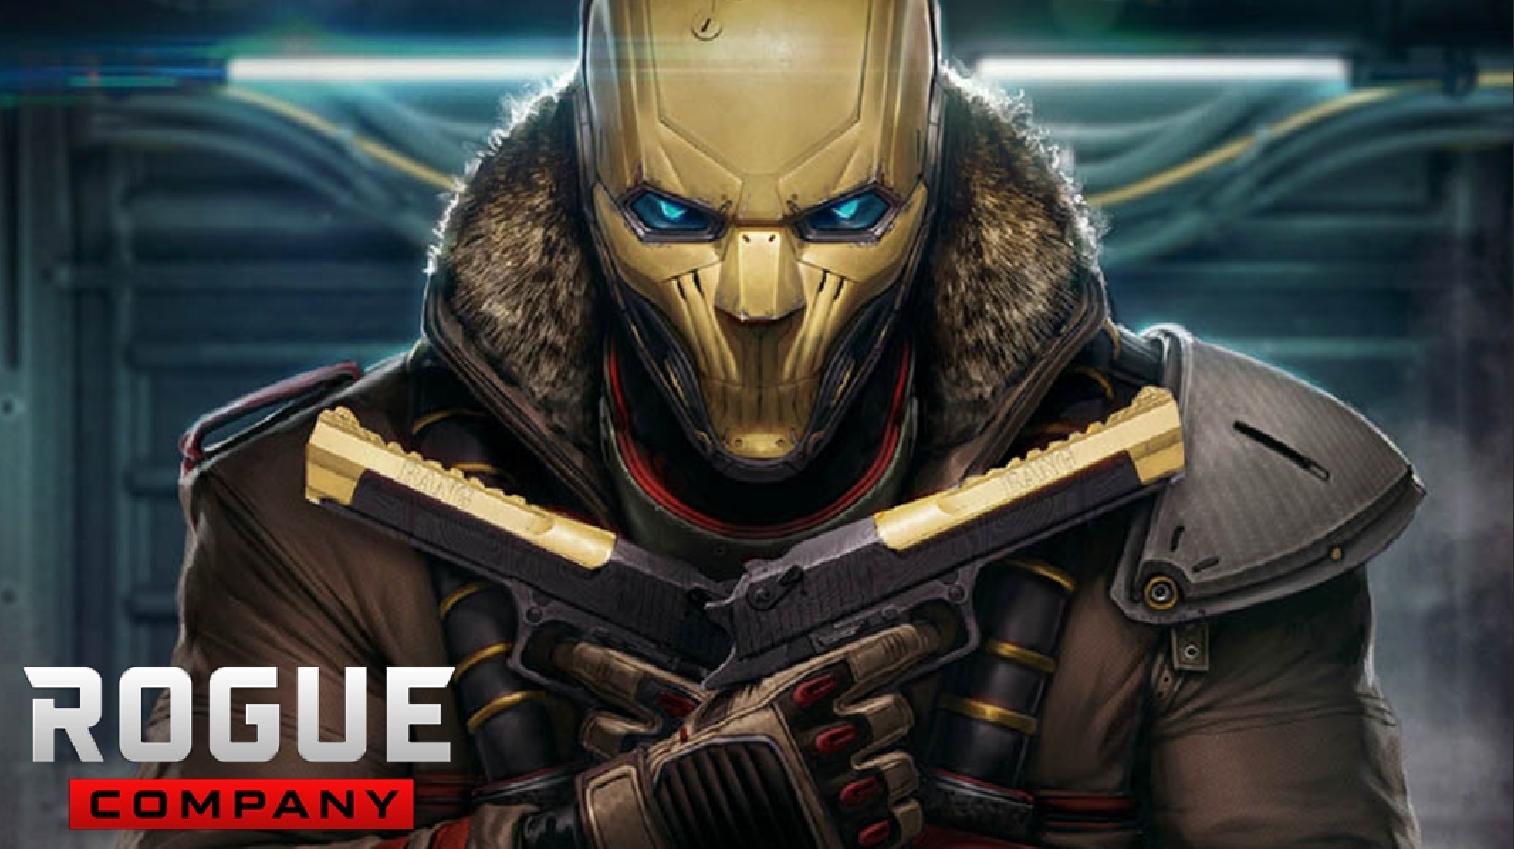 Hi-Rez announces a new cross-platform shooter called Rogue Company